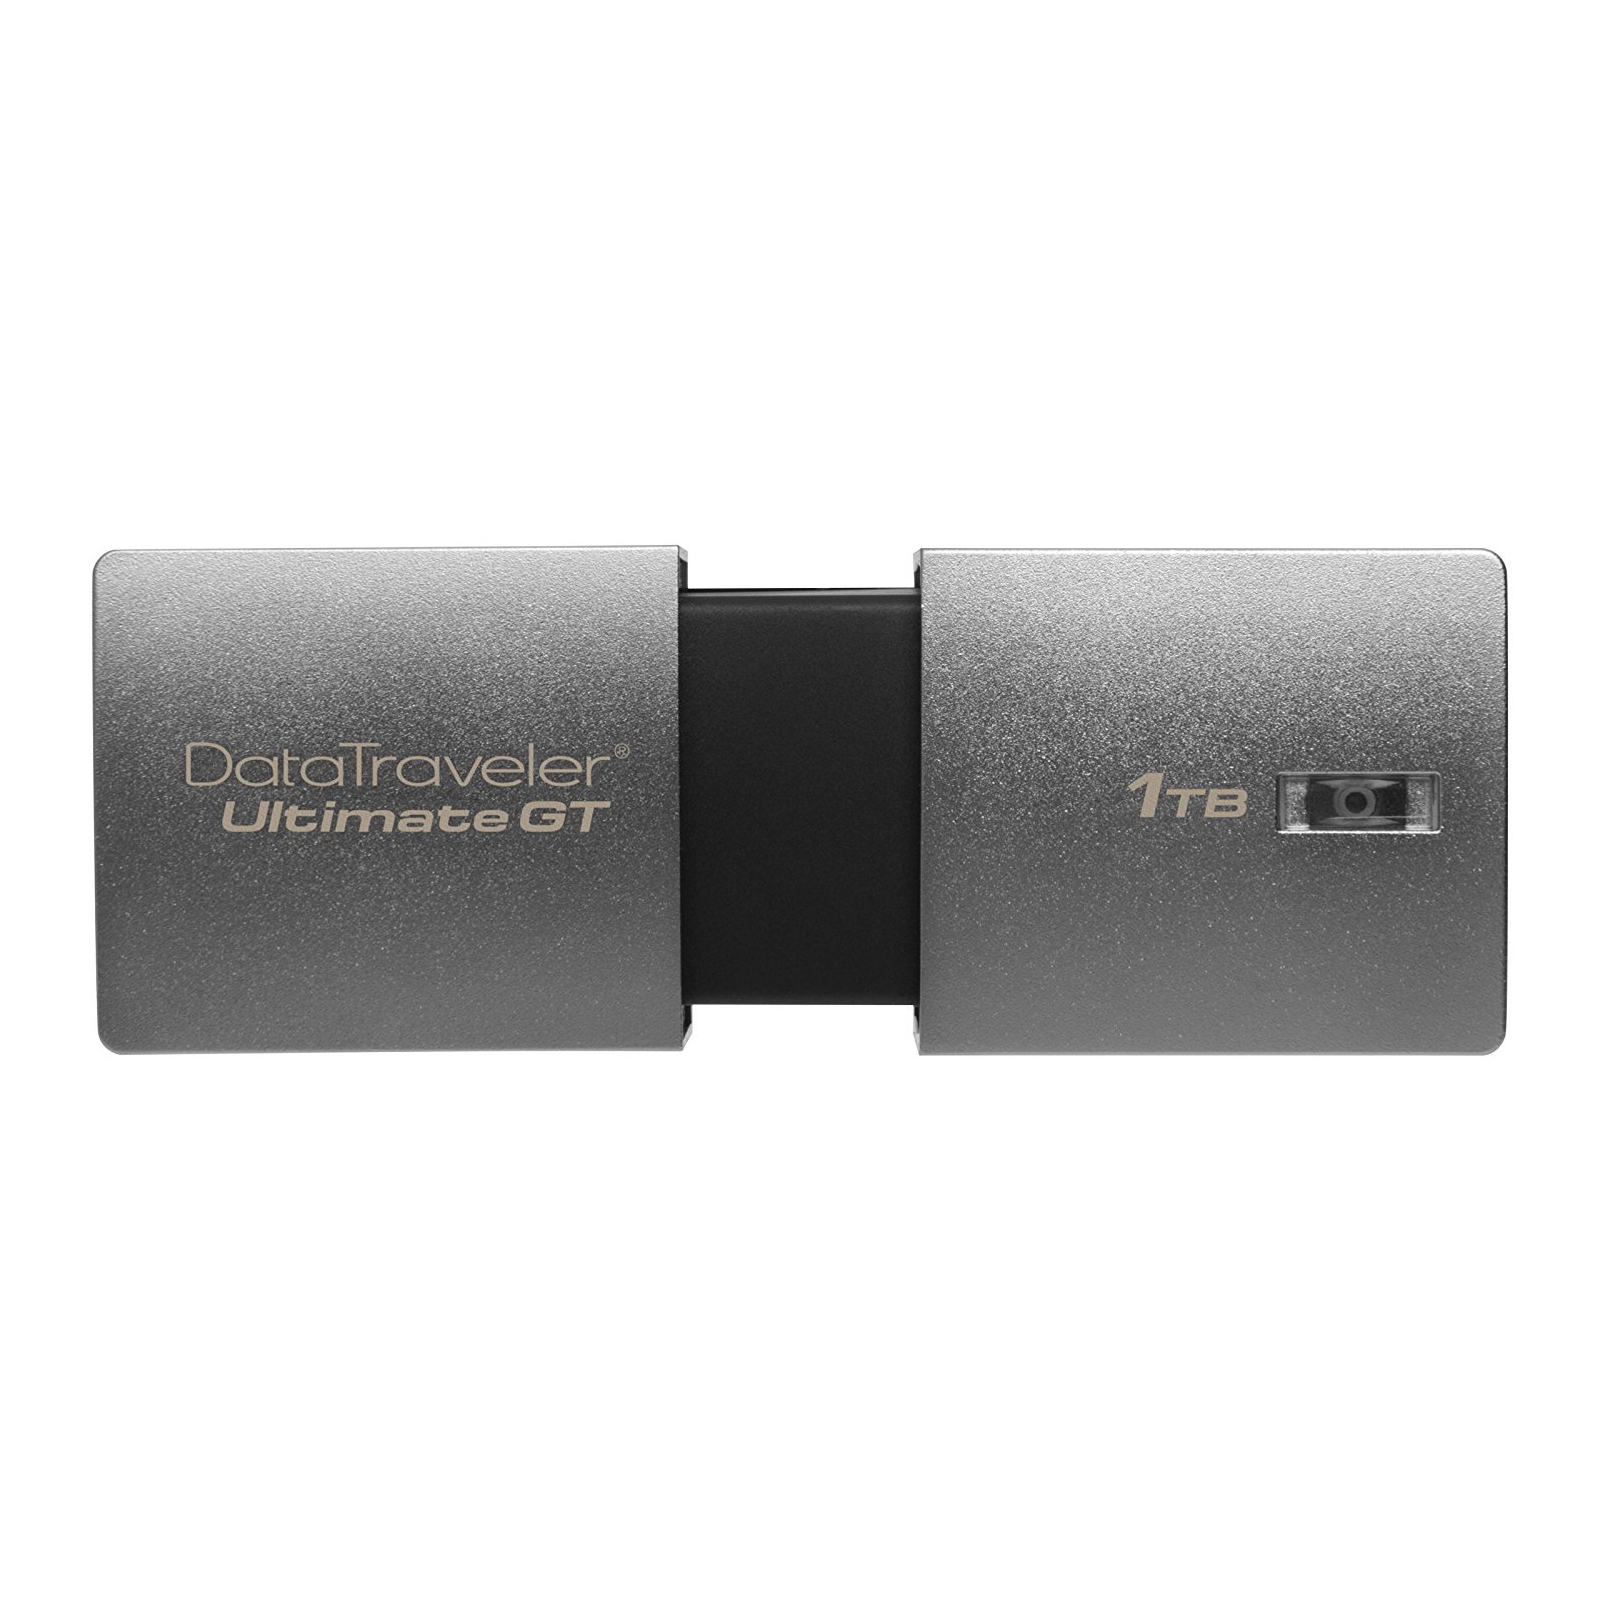 USB флеш накопитель Kingston 1TB DataTraveler Ultimate GT USB 3.0 (DTUGT/1TB)